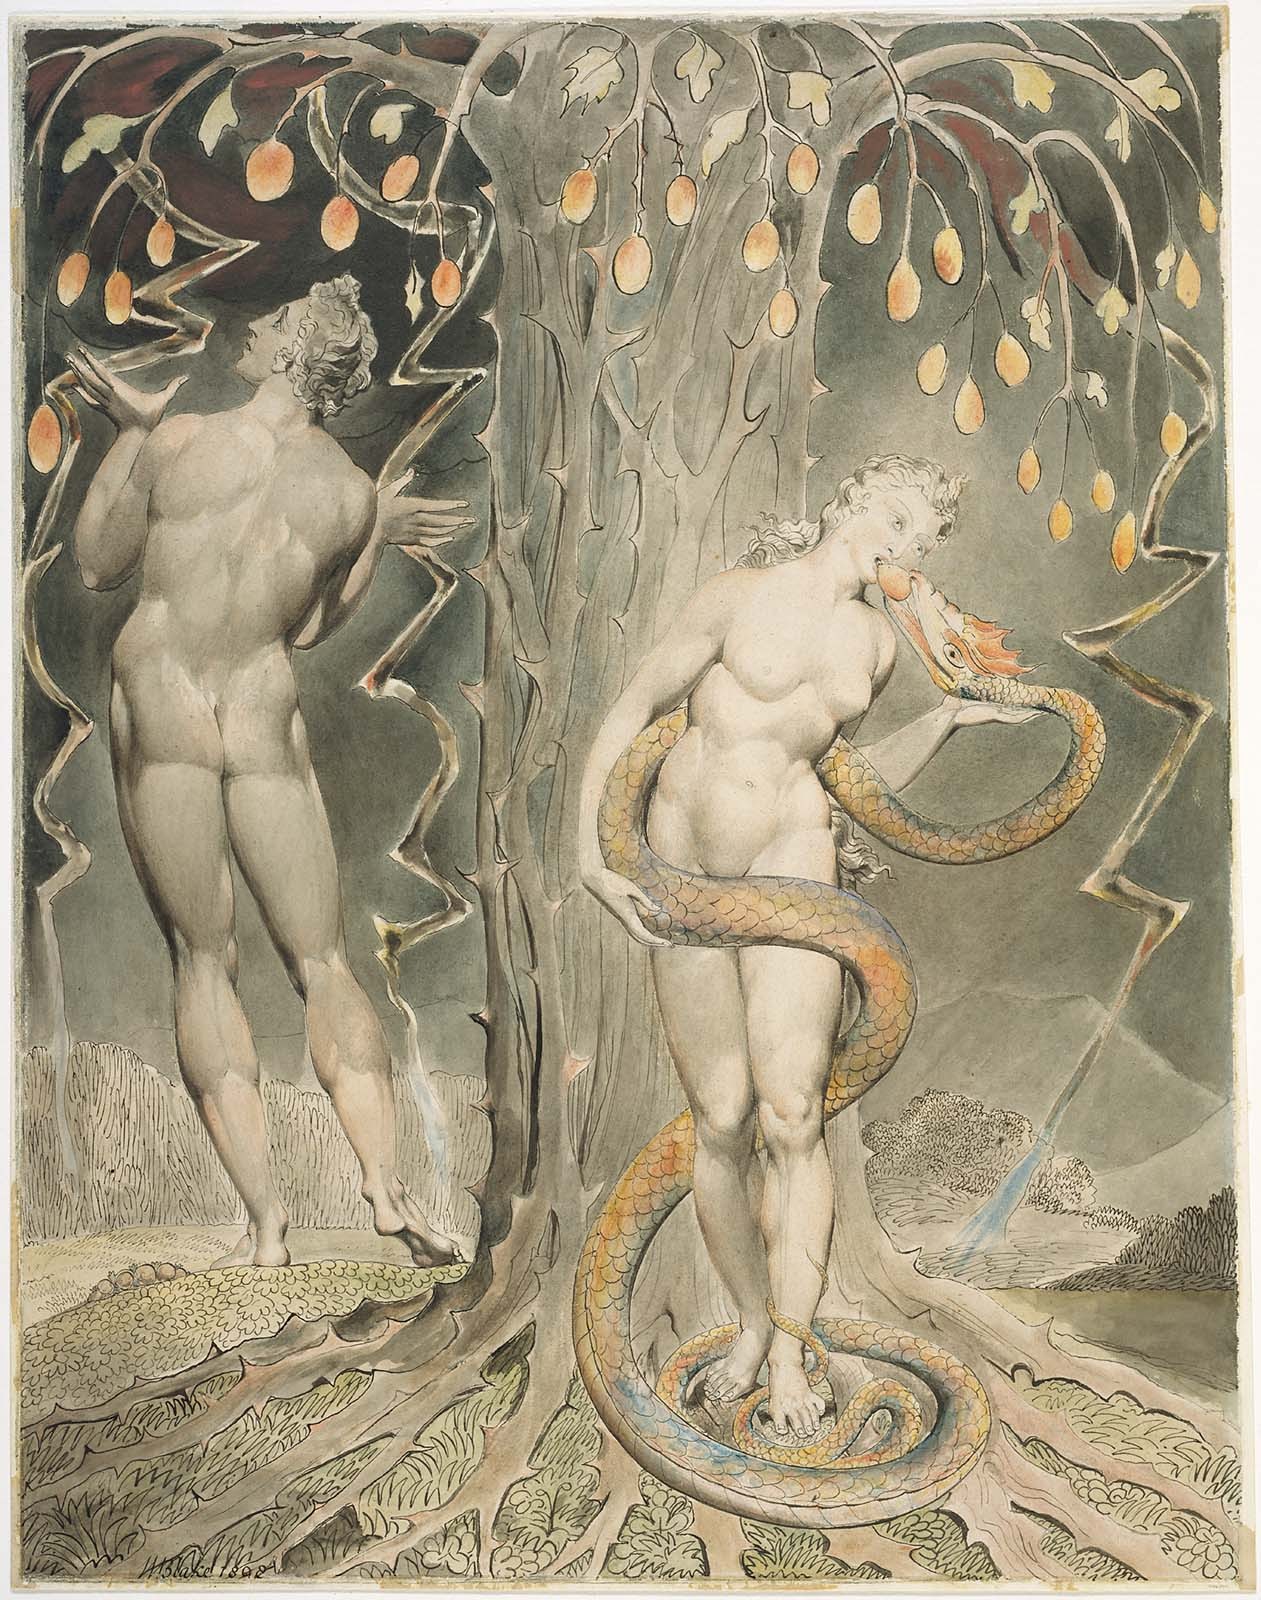 centuriespast:
“ The Temptation and Fall of Eve (Illustration to Milton’s “Paradise Lost”)
1808
William Blake (English, 1757–1827)
MFA Boston
”